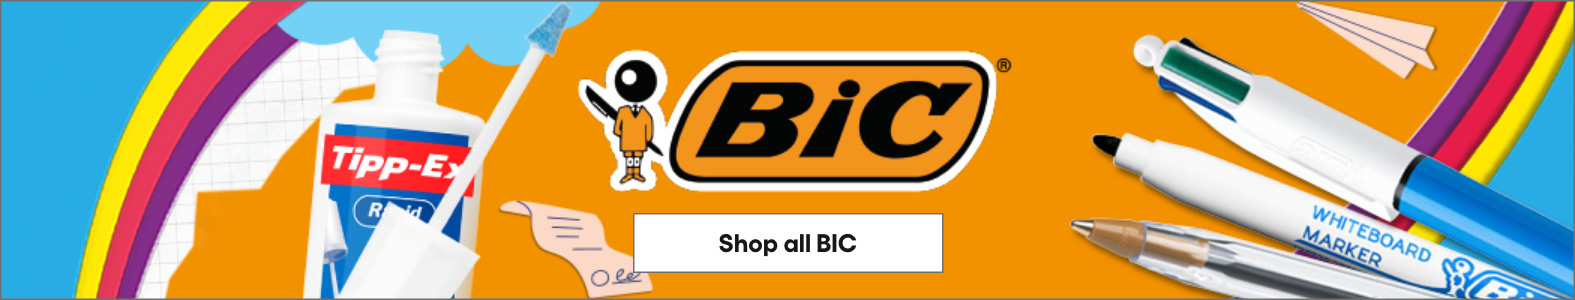 BIC - Shop all